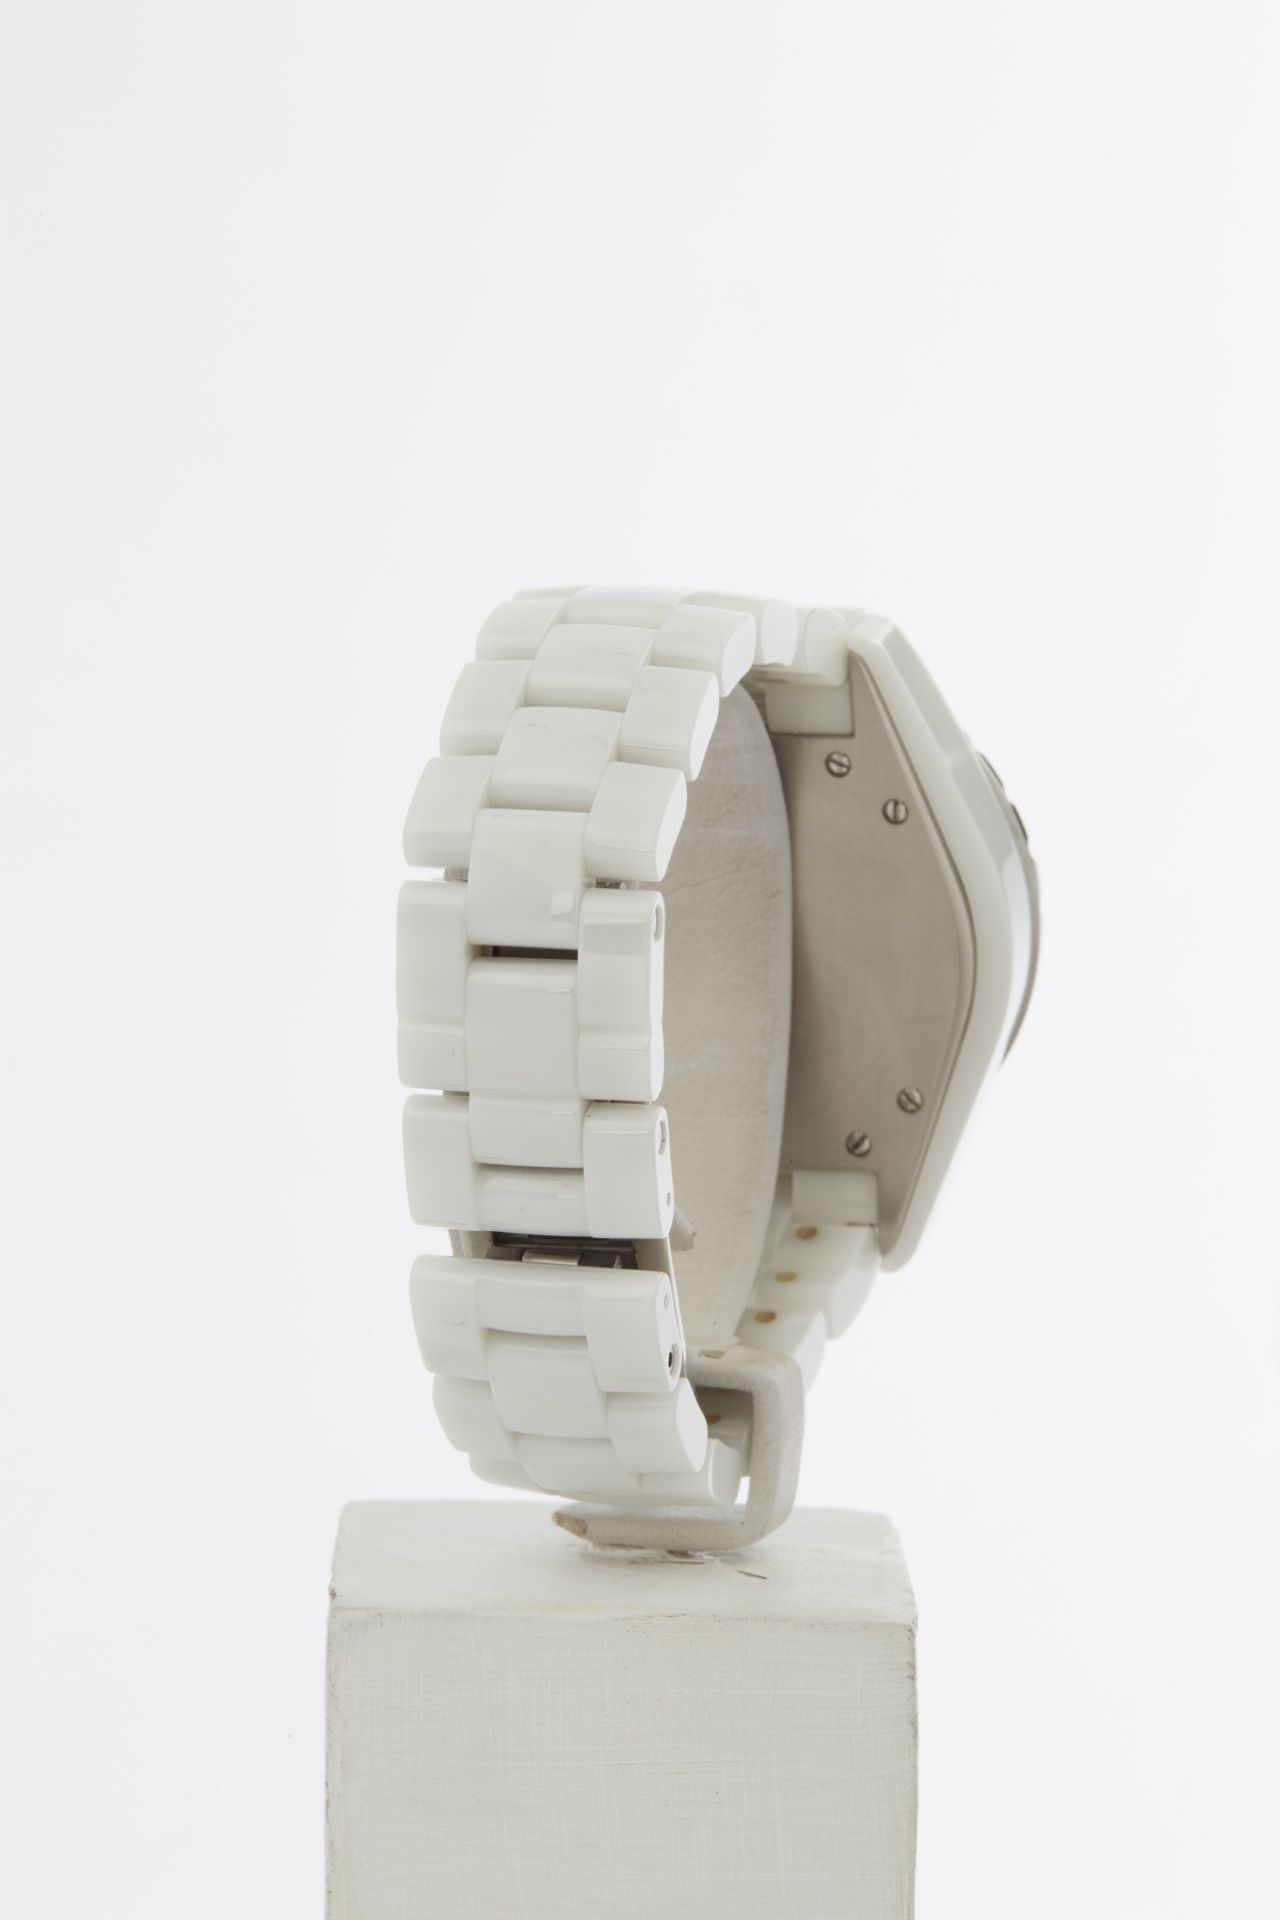 Chanel J12 Diamond Chronograph White Ceramic - H1007 - Image 4 of 4